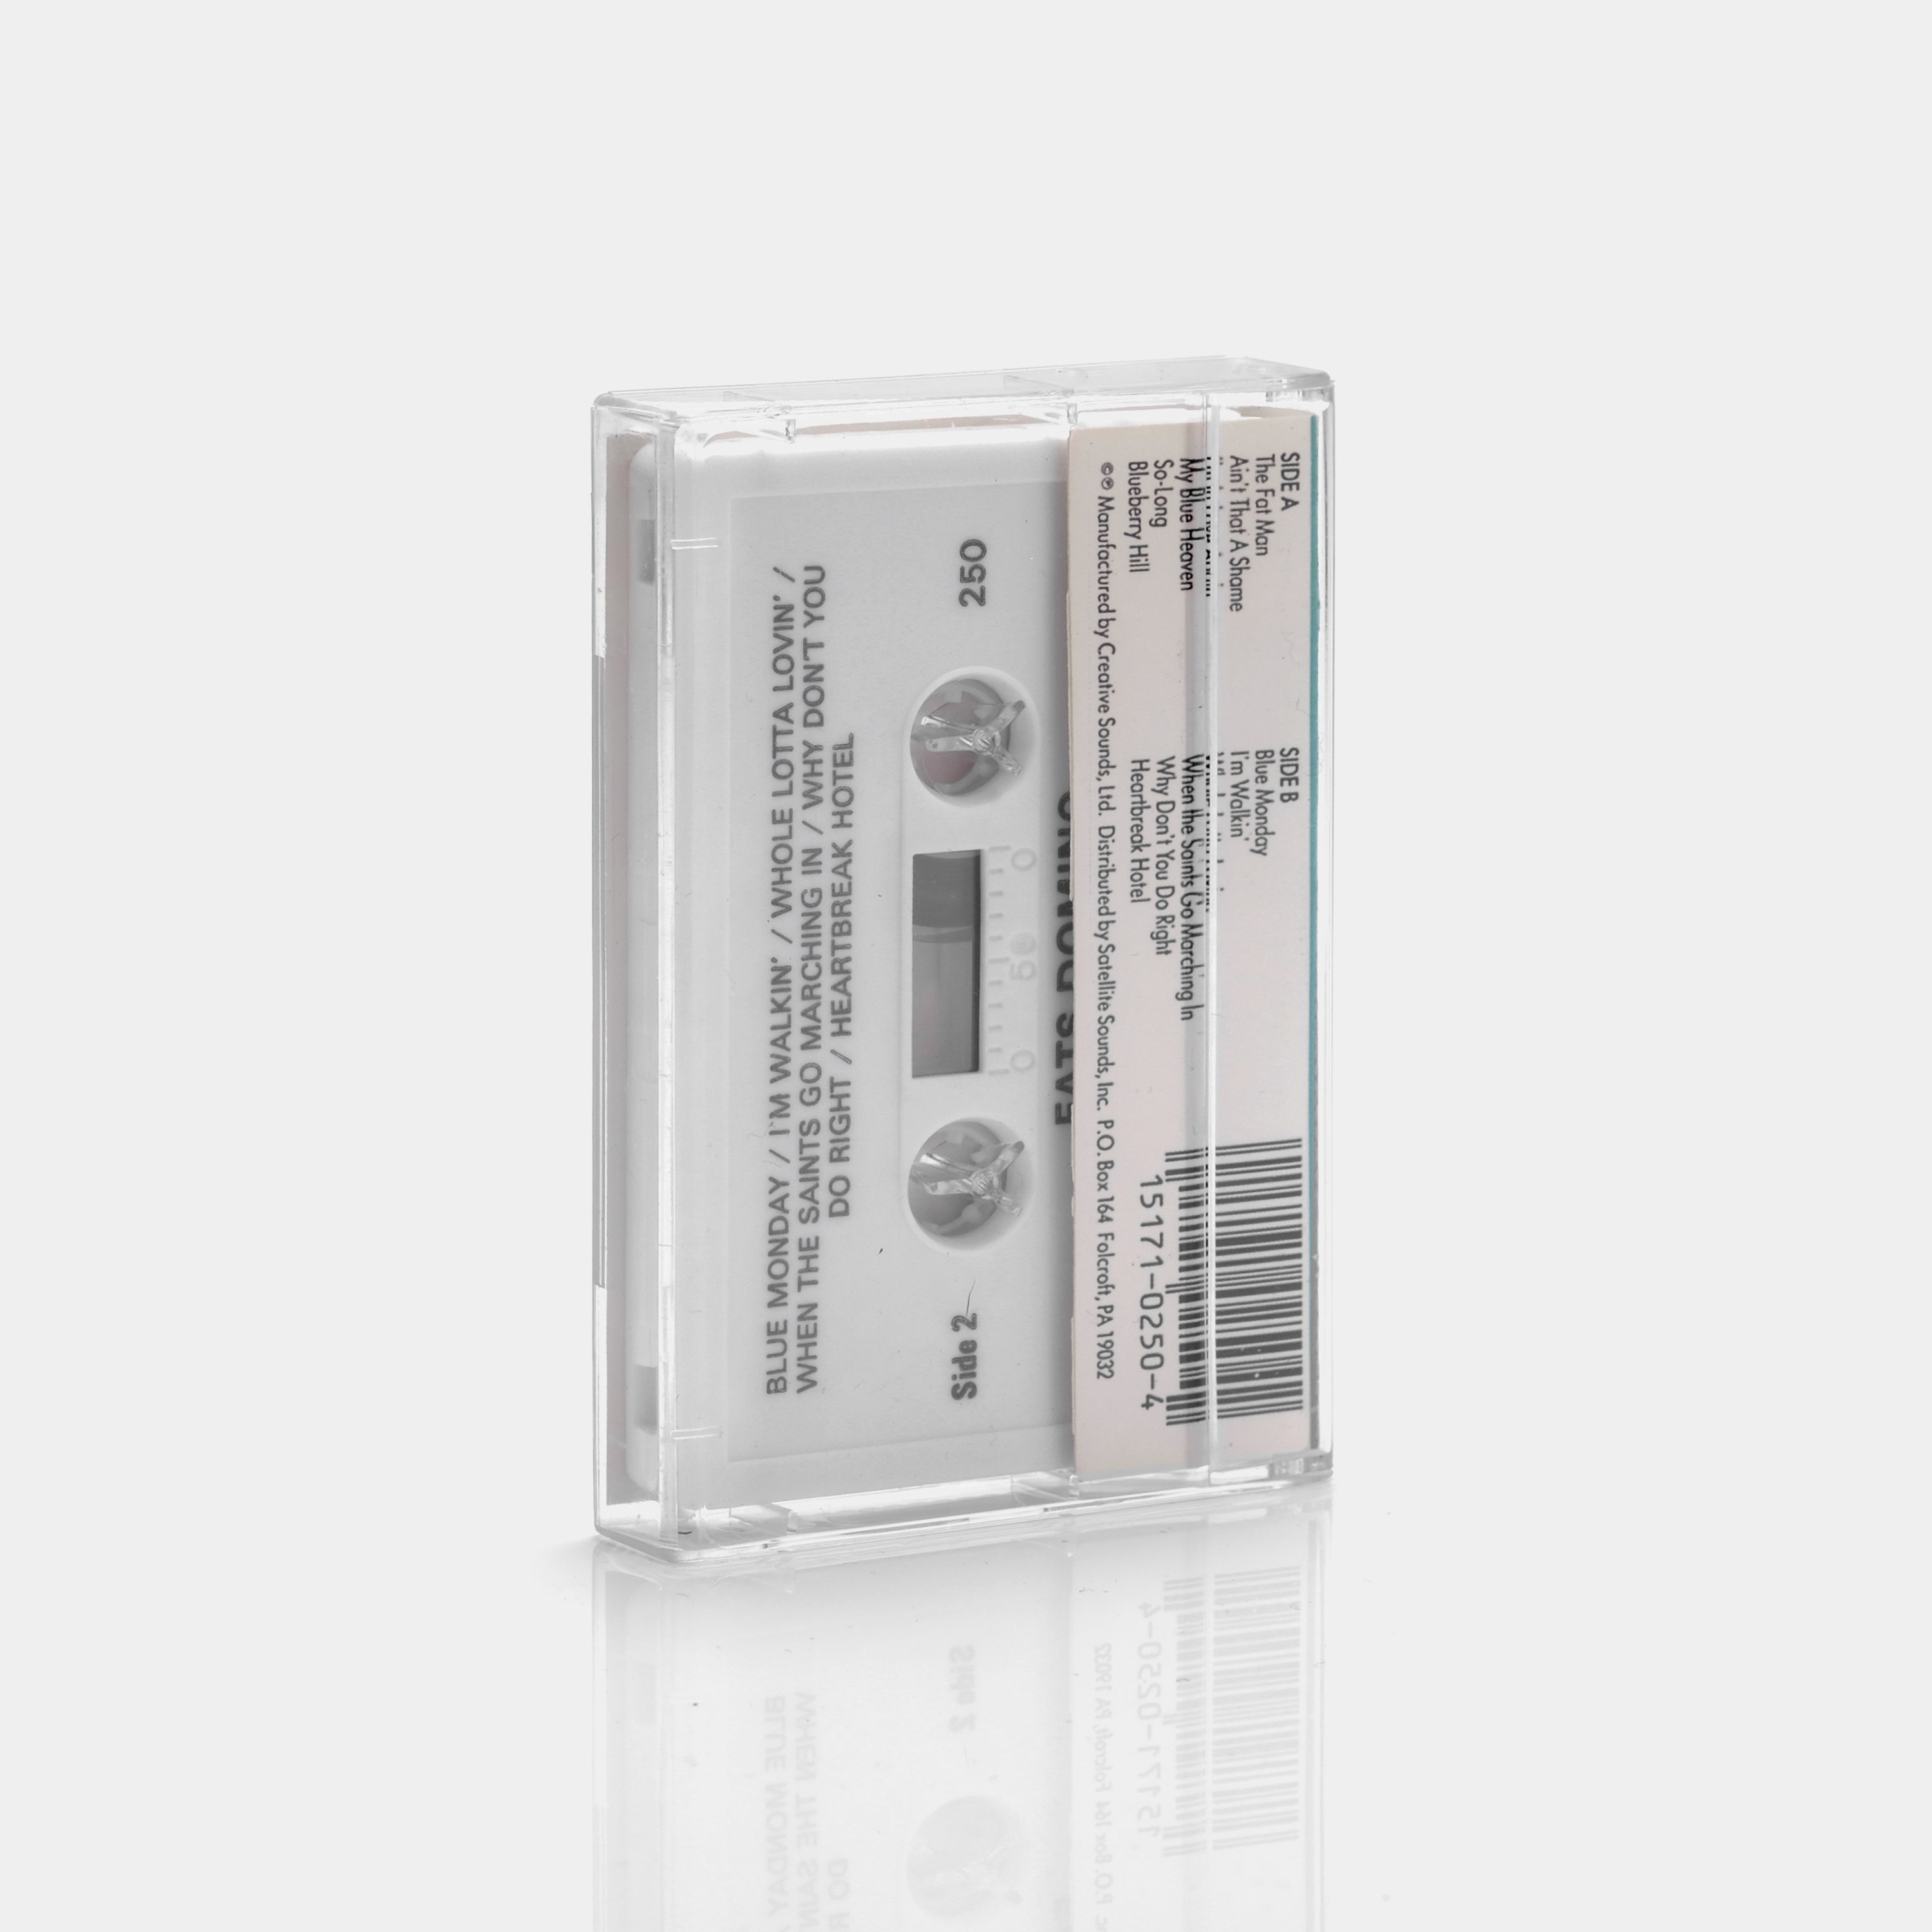 Fats Domino - Greatest Hits Vol. 1 Cassette Tape